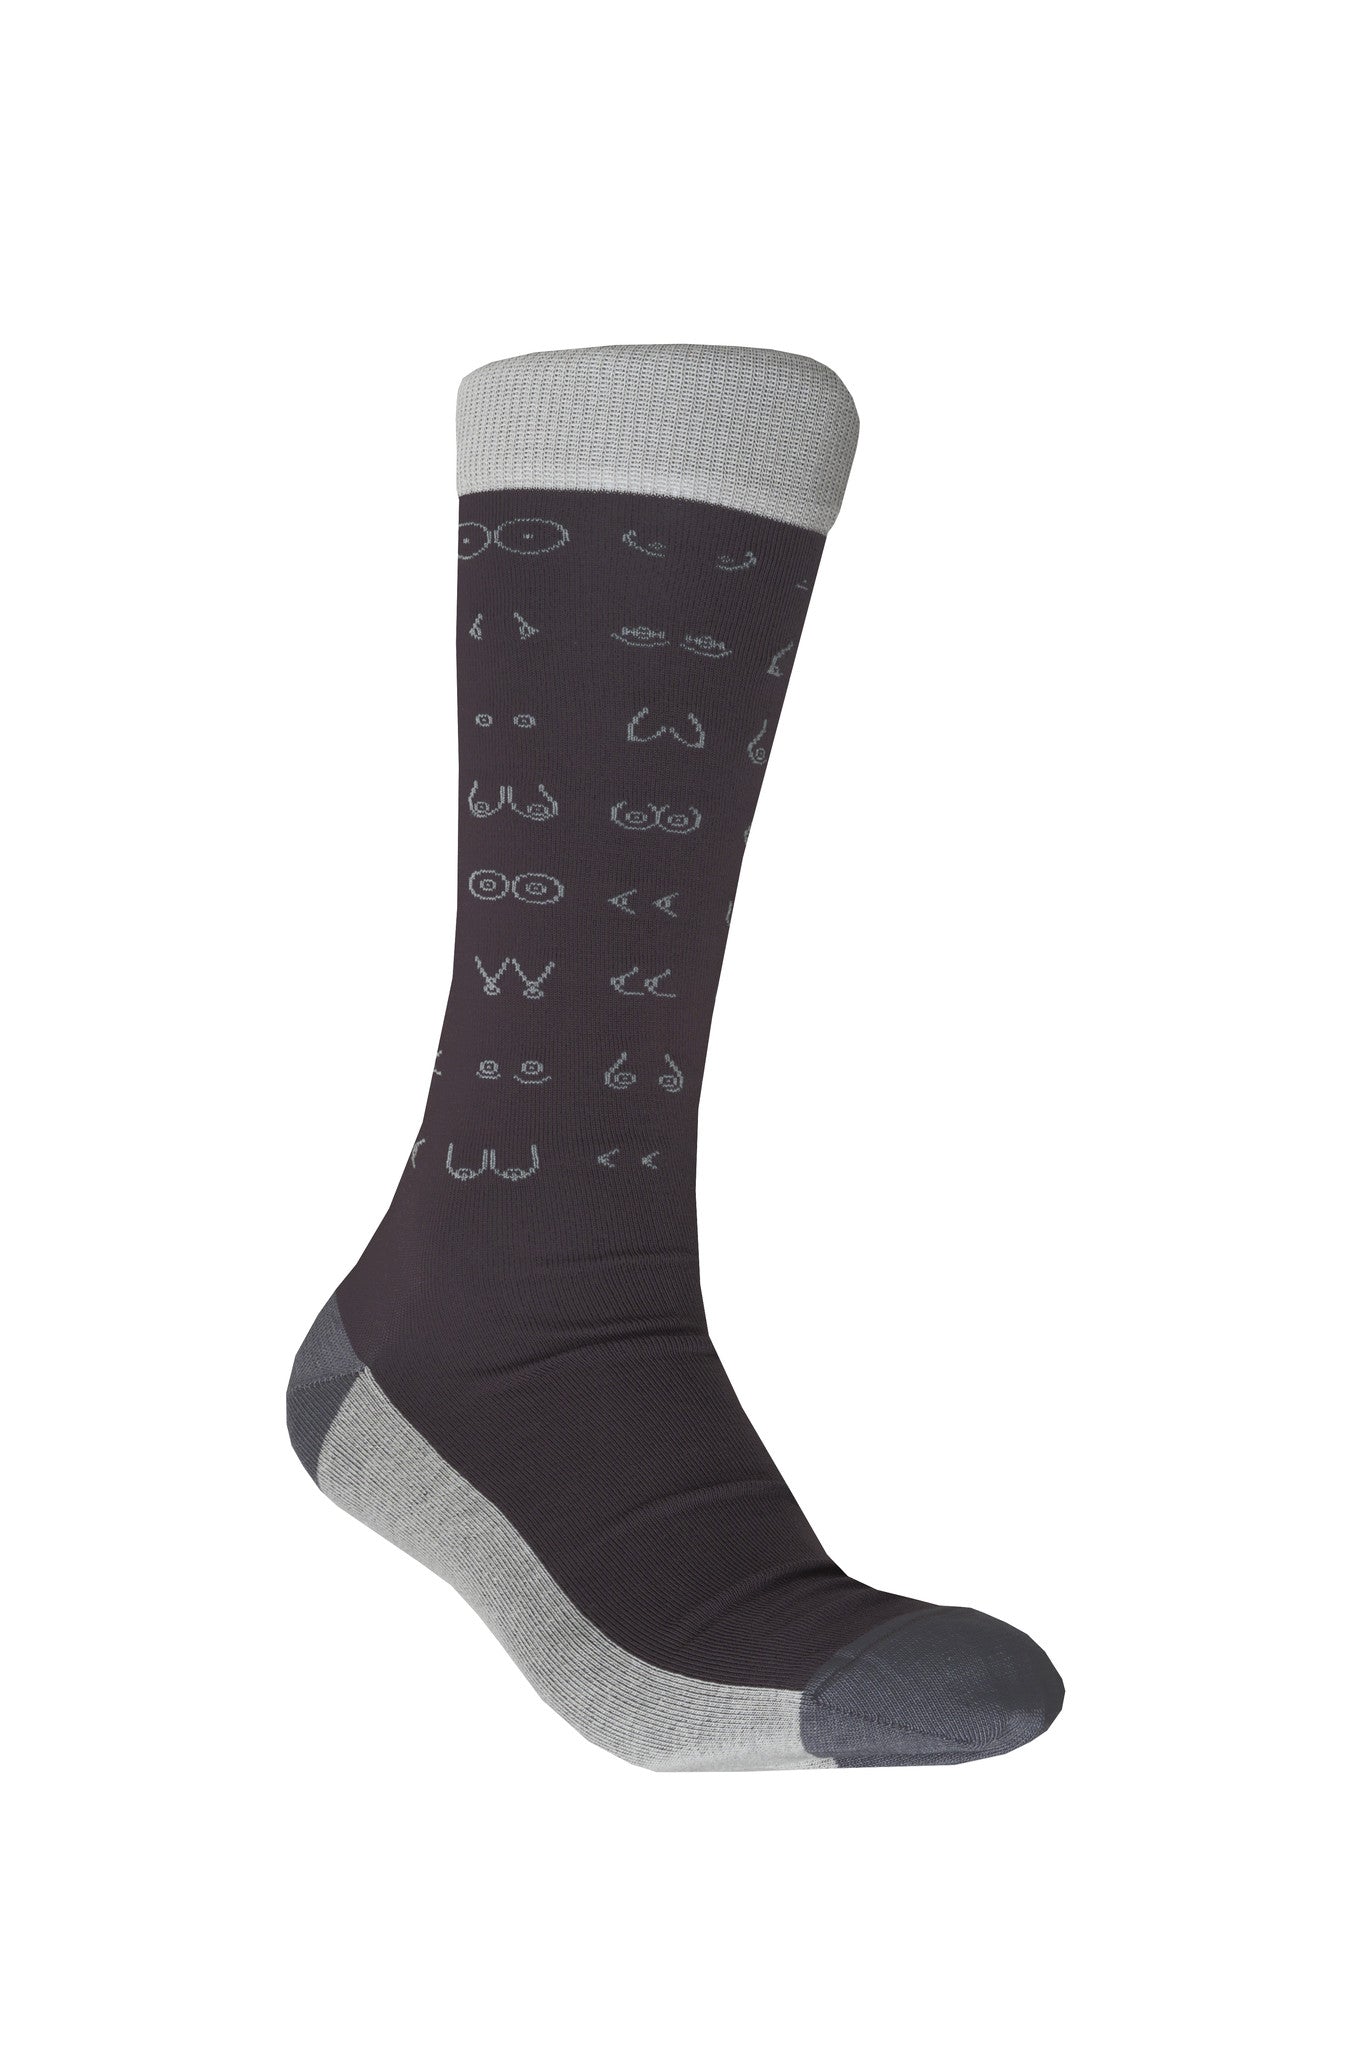 Happy Boobies Grey Socks